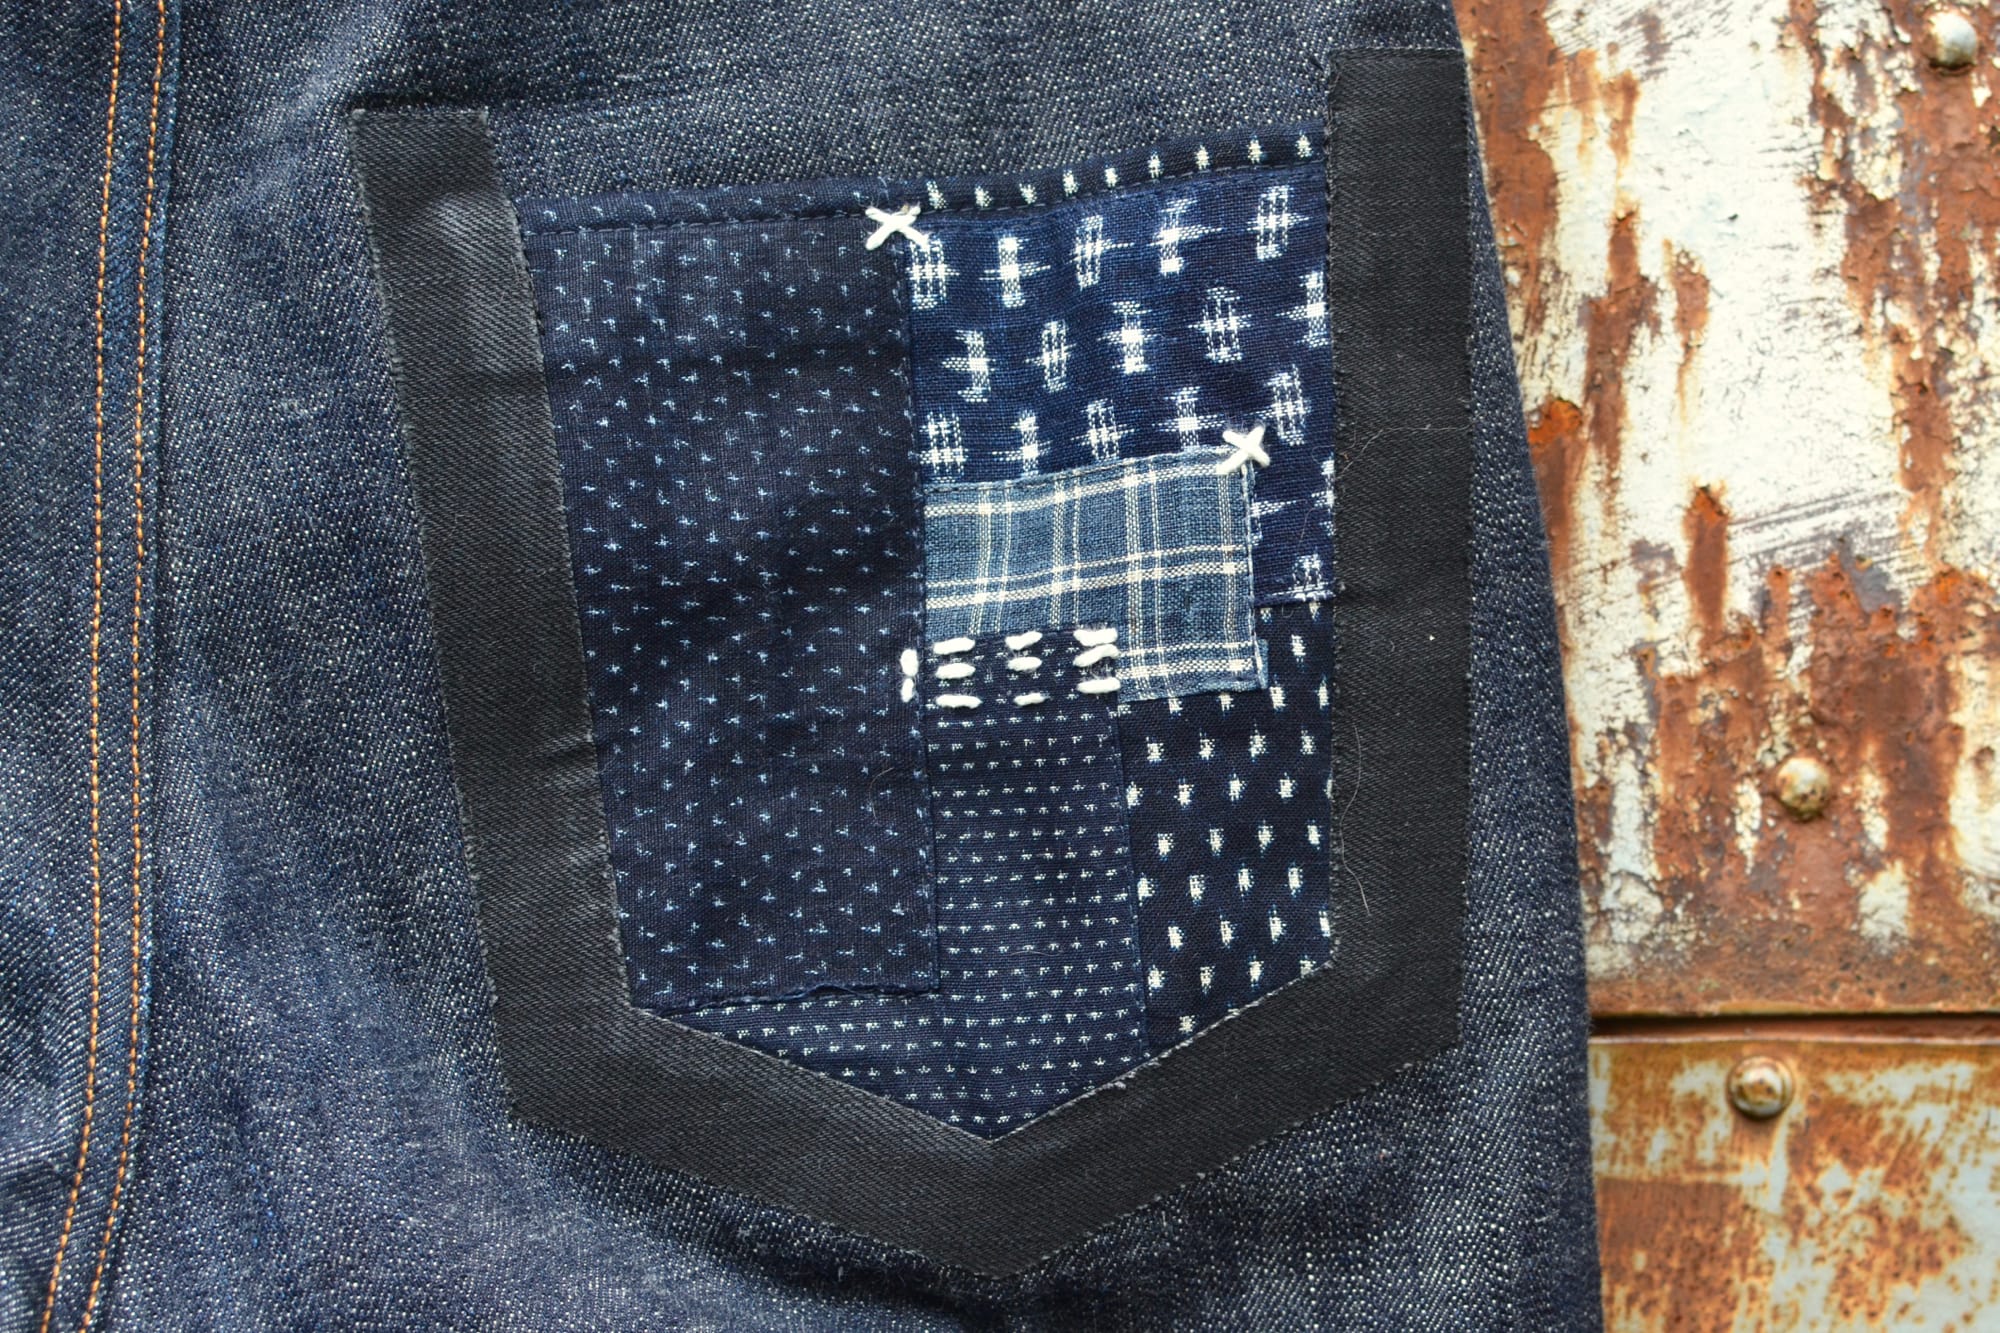 PHI DENIM PHI04 16oz jeans raw selvedge MADE IN JAPAN jeans Pocket made with kimono offcuts, Tsugihagi つぎはぎ 